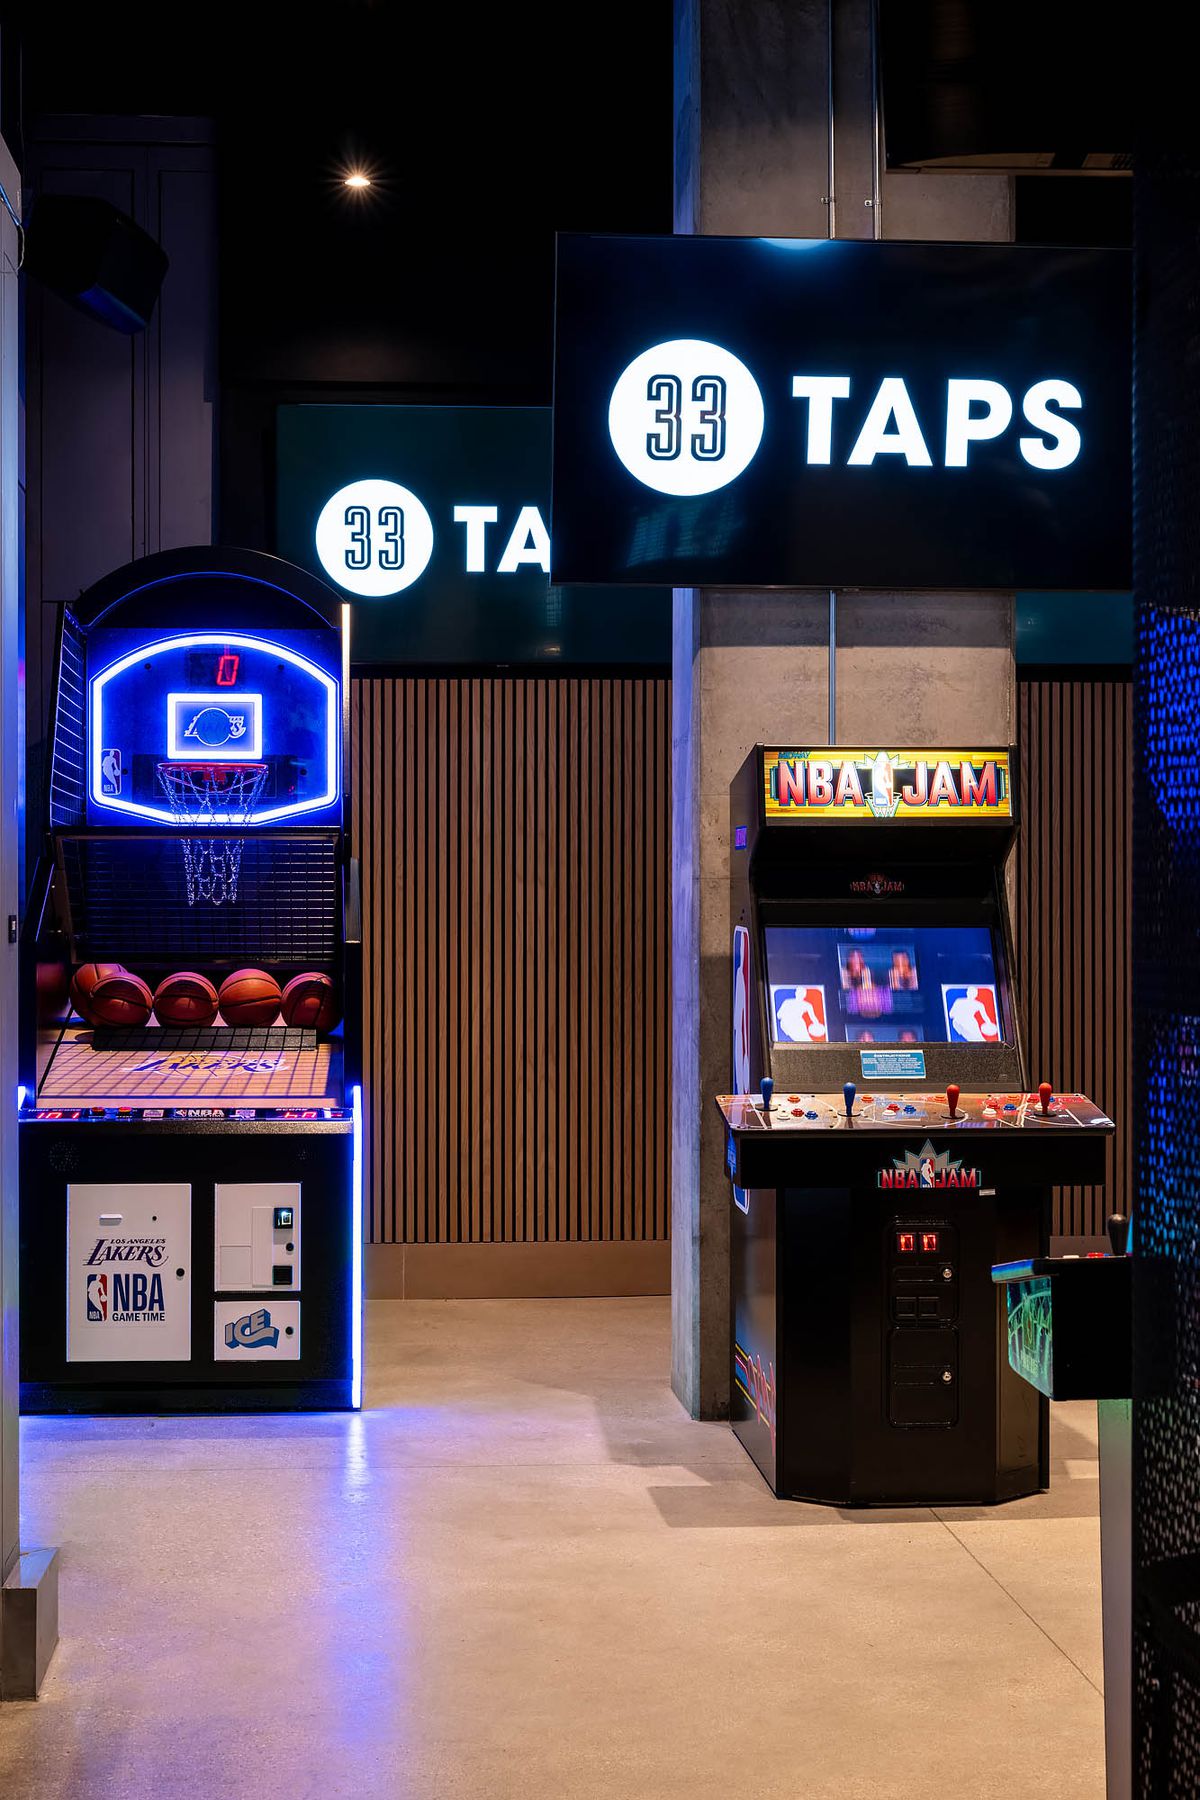 Retro arcade and basketball hoops at a modern sports bar.